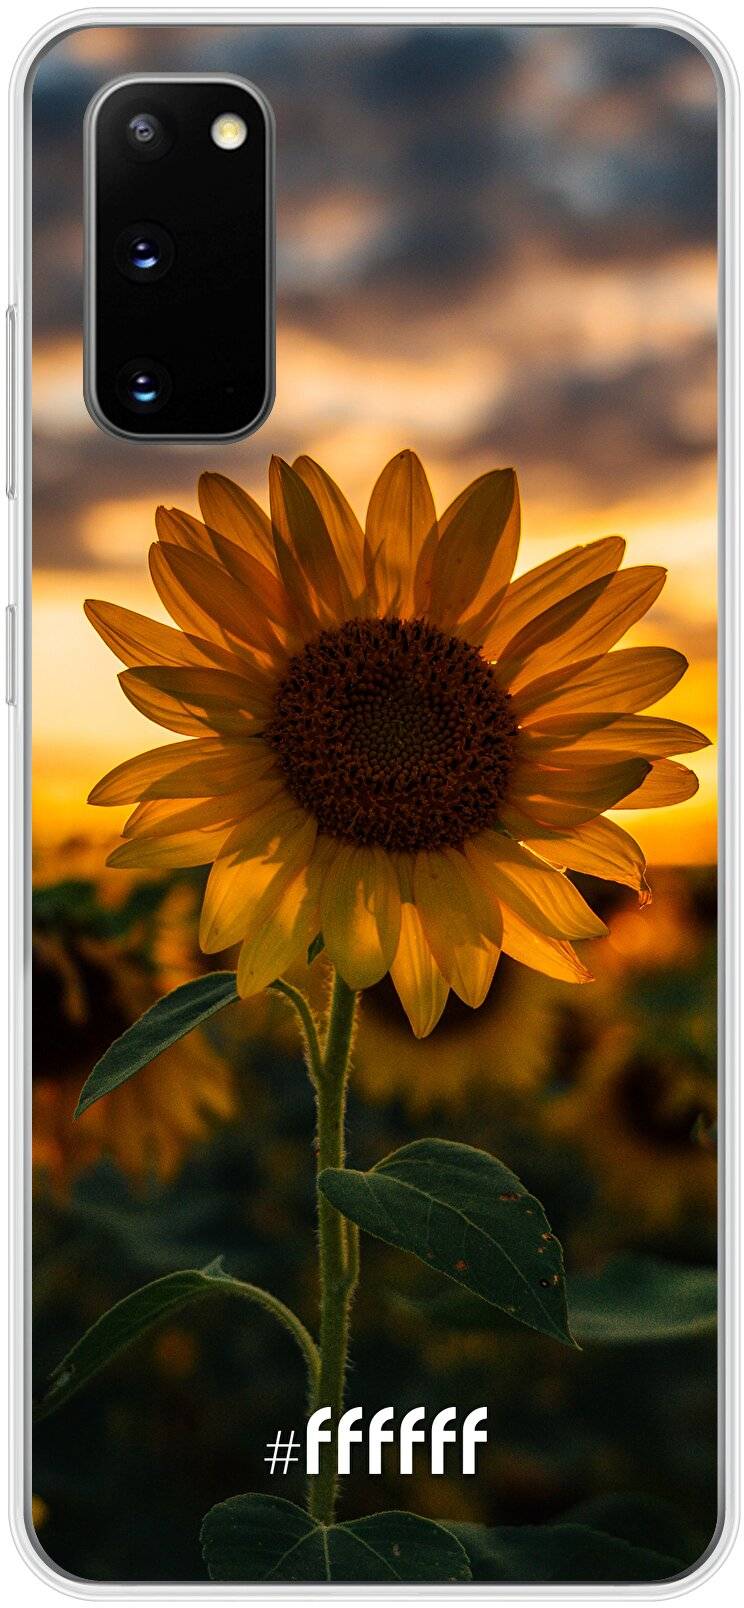 Sunset Sunflower Galaxy S20